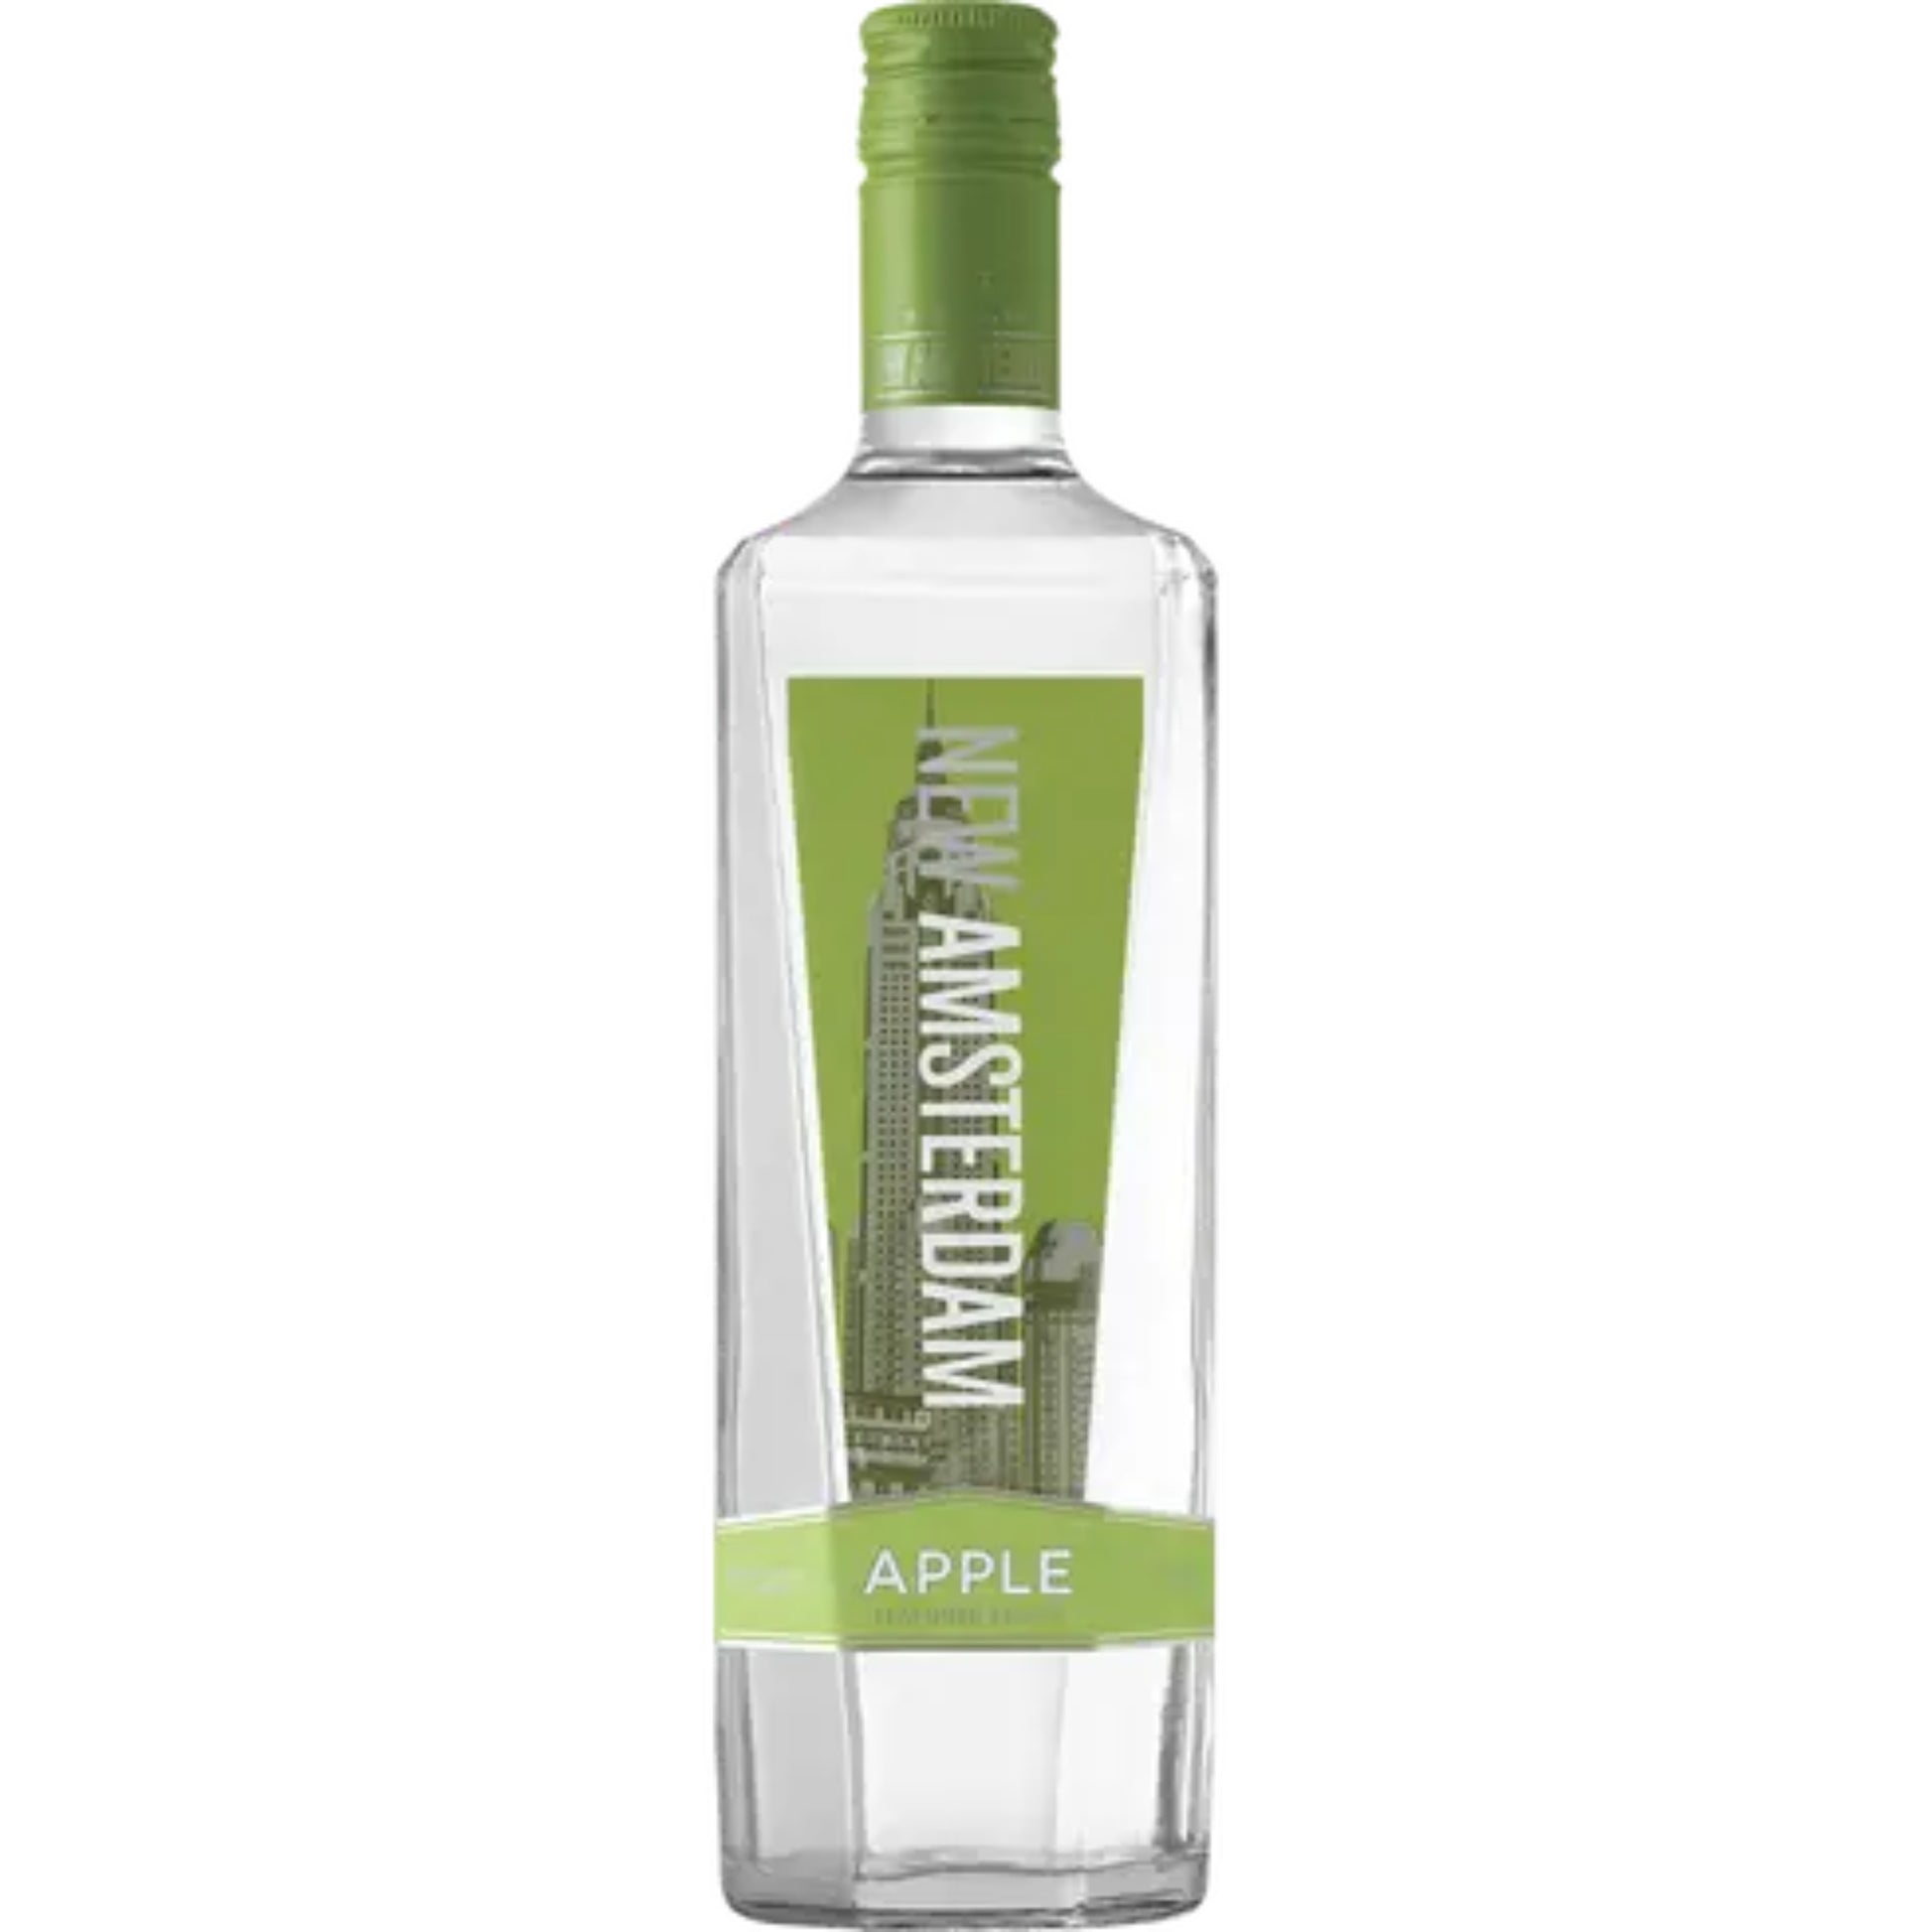 New Amsterdam Apple Vodka - Liquor Geeks